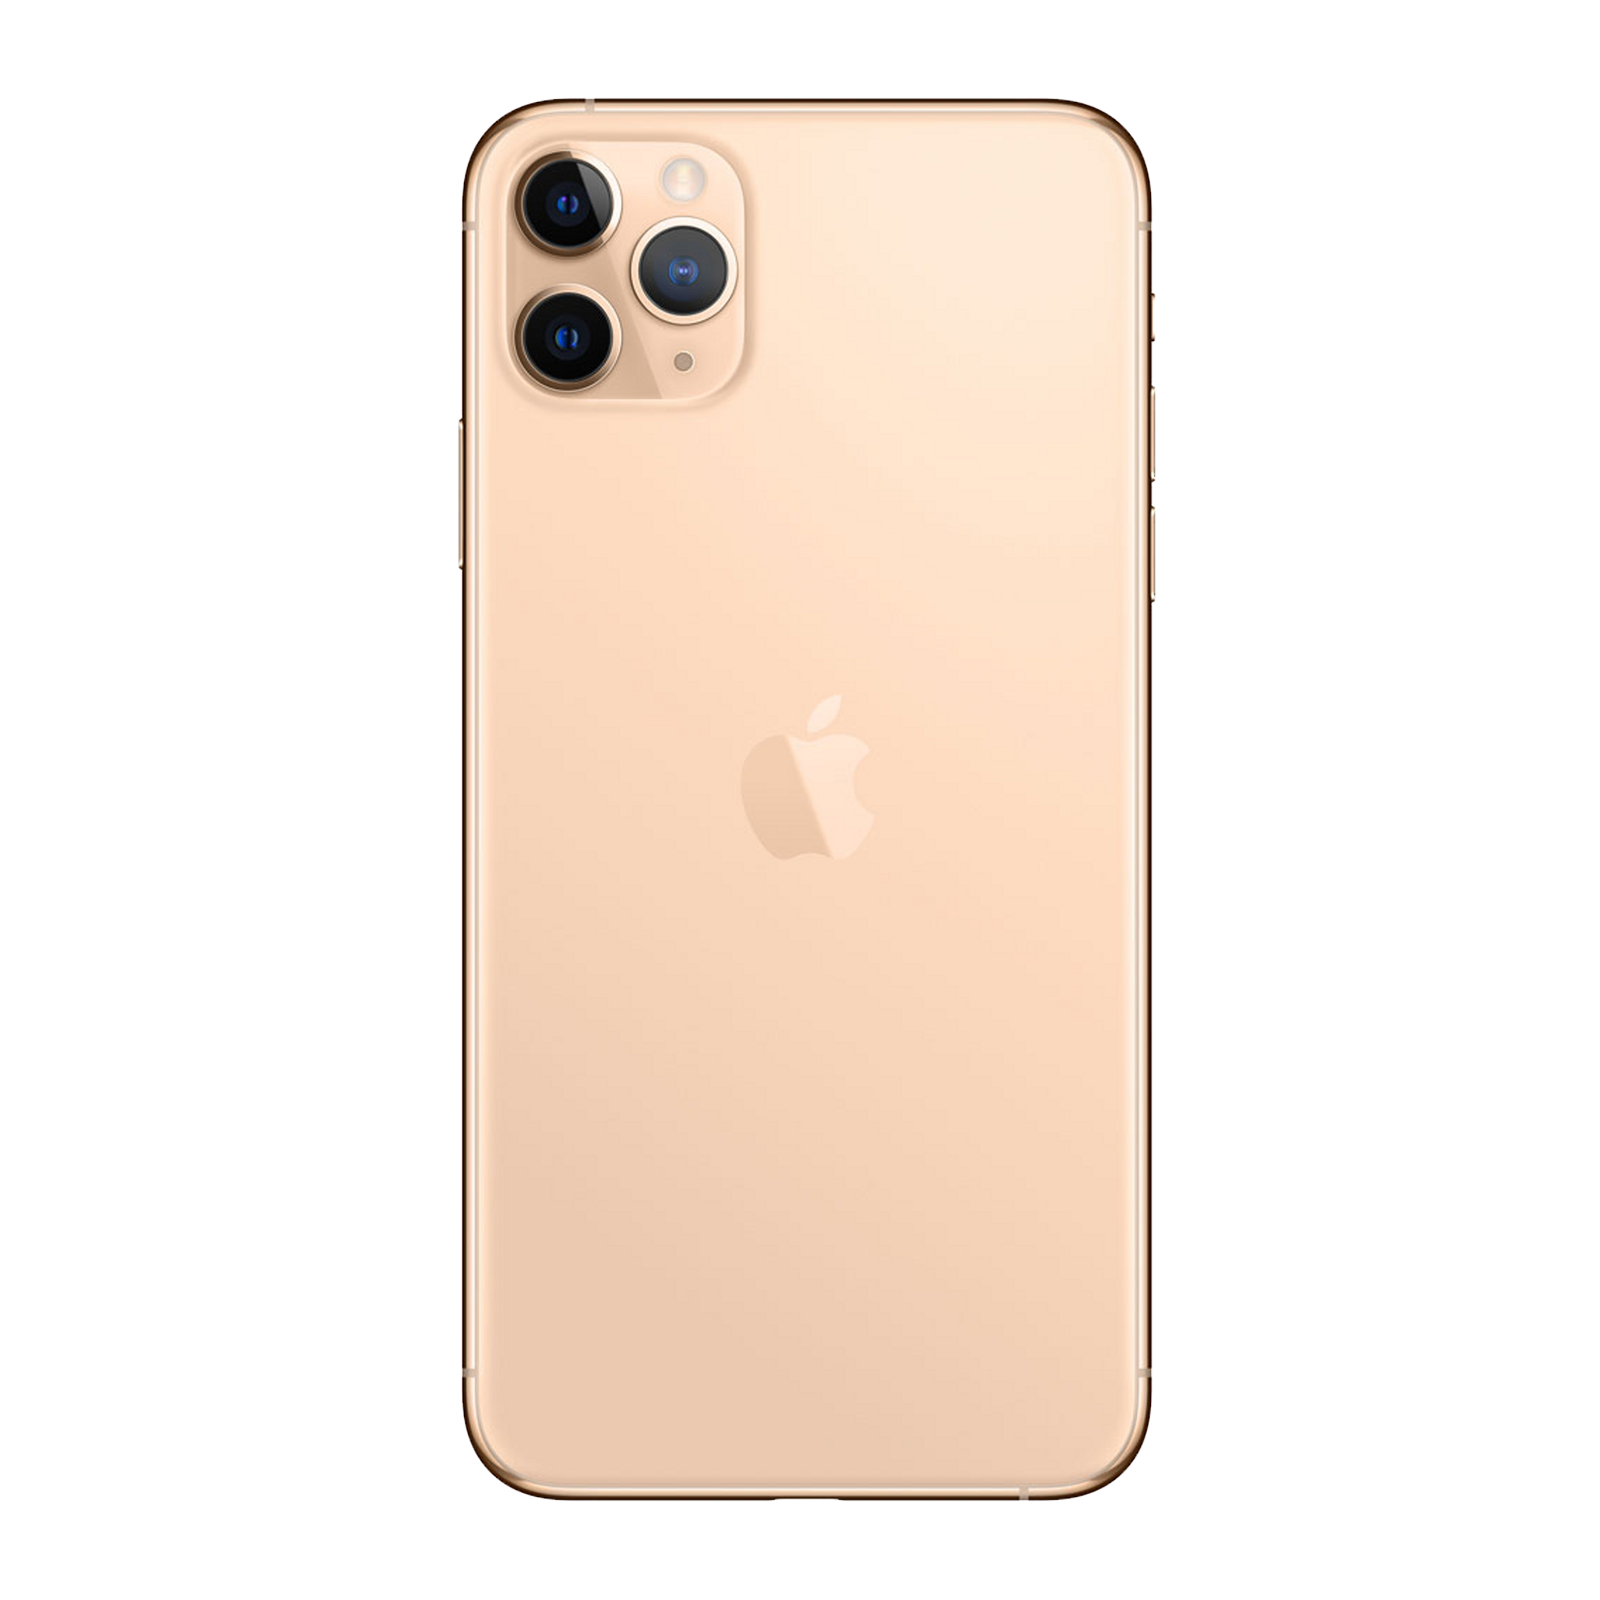 iPhone 11 Pro 512GB Gold Pristine - Unlocked